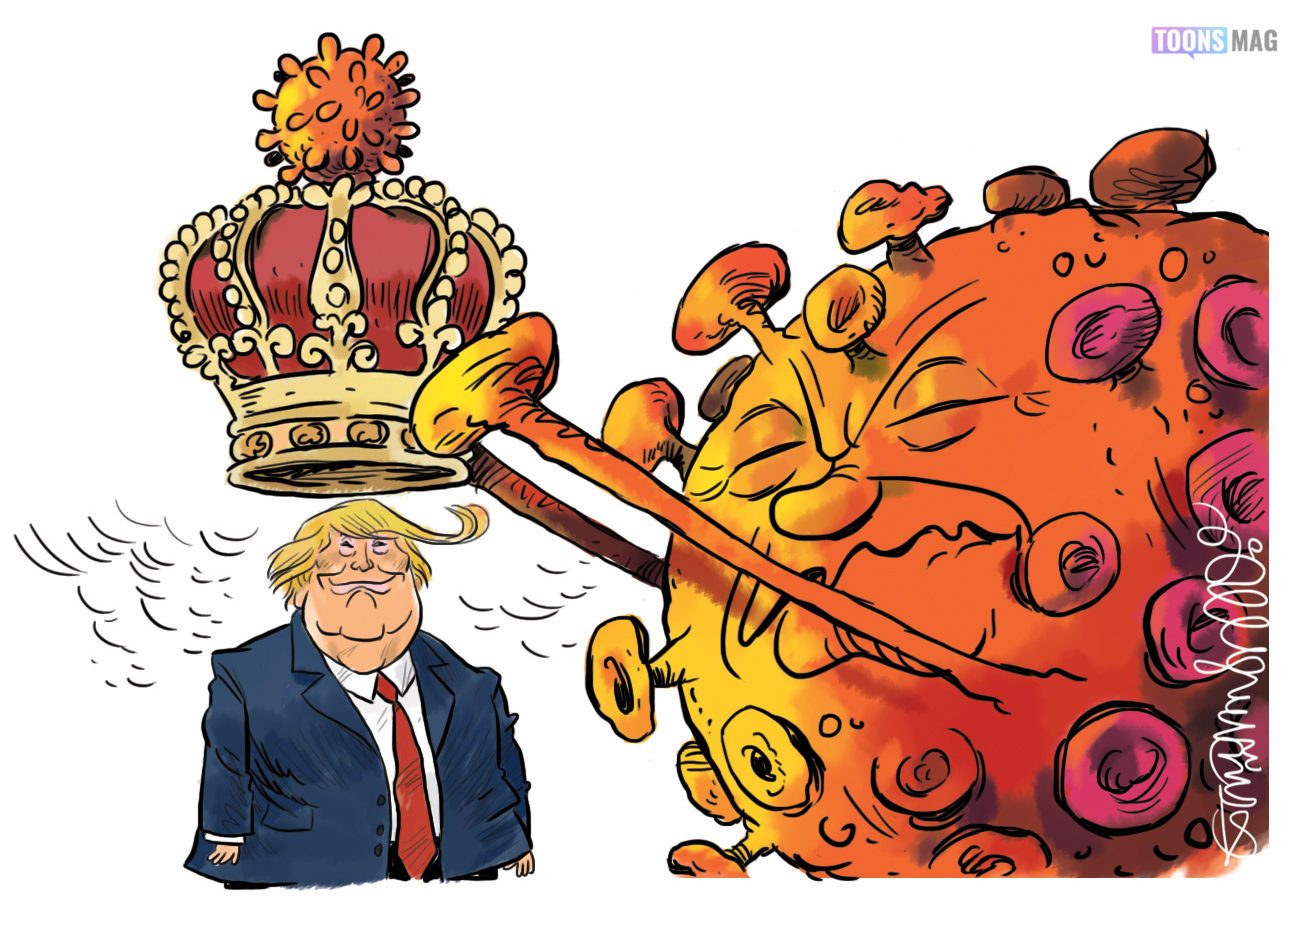 Coronation Trump - Toons Mag